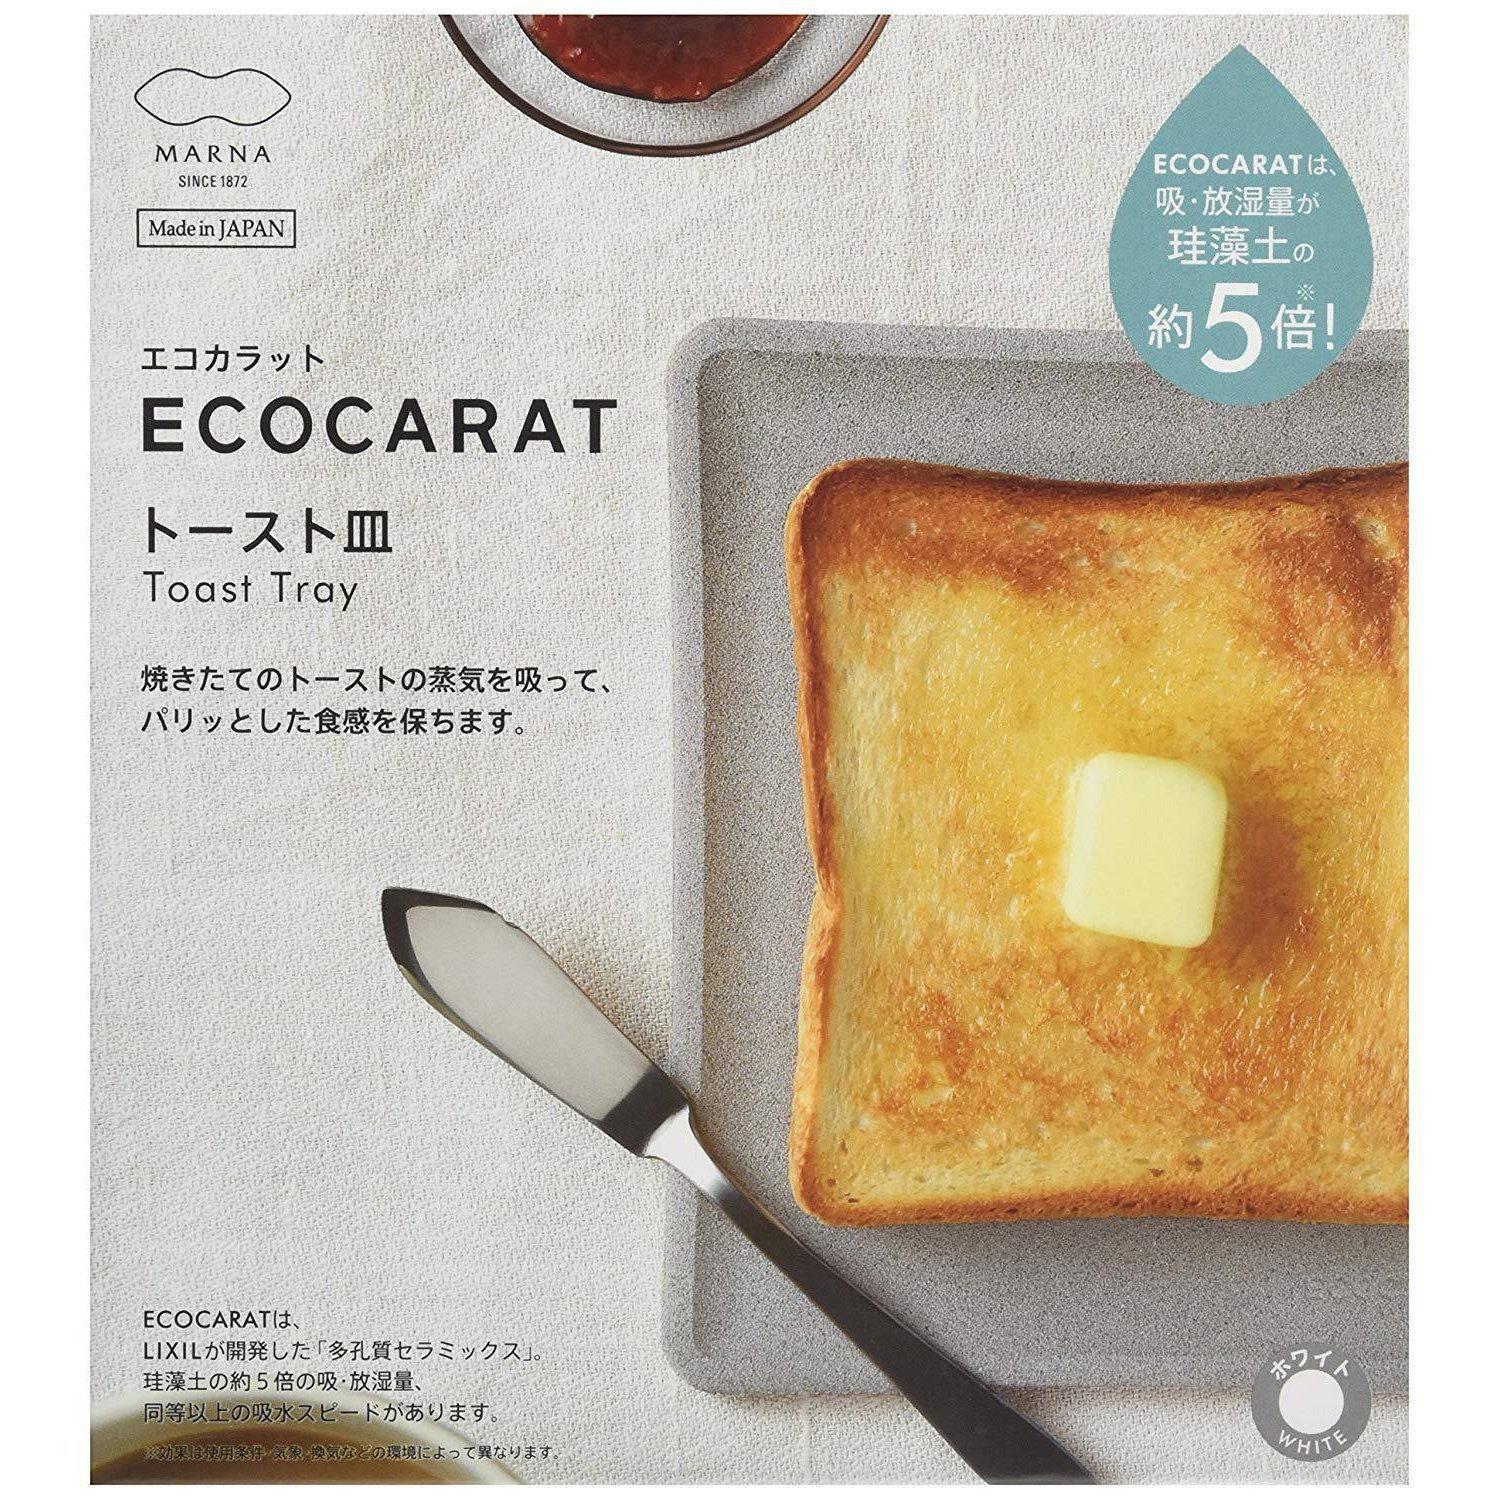 Marna Porous Ceramics Ecocarat Toast Tray White K686W, Japanese Taste